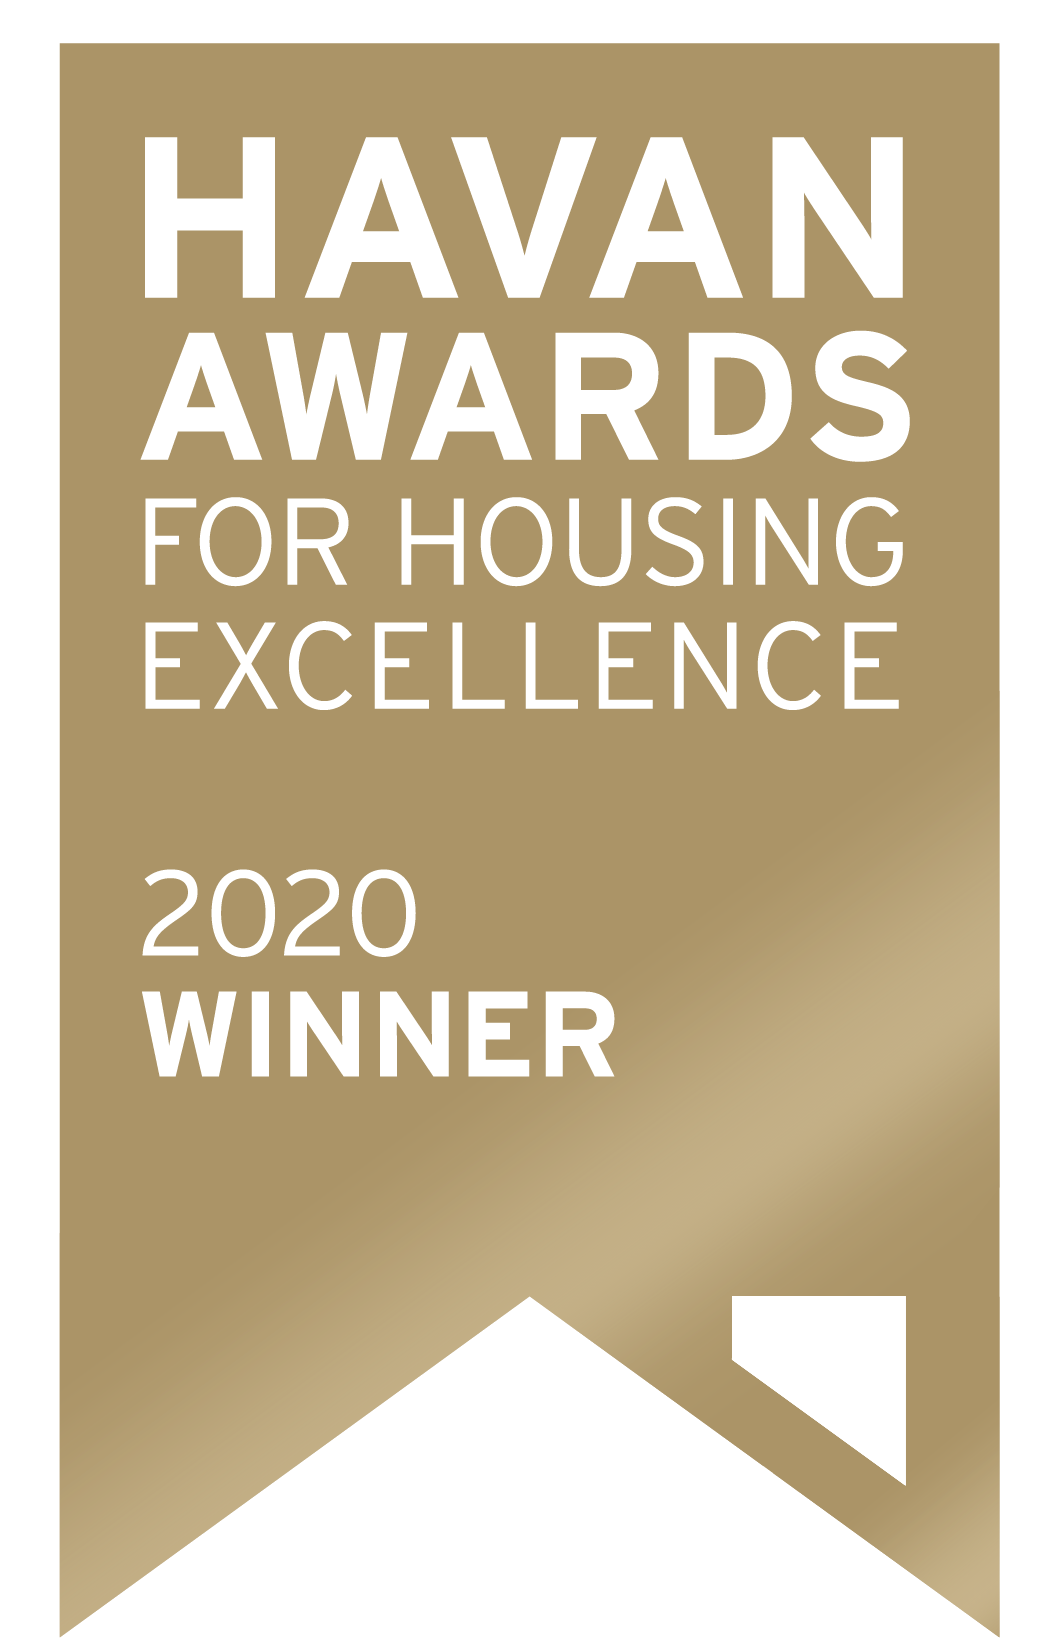 HAVAN Awards For Housing Excellence